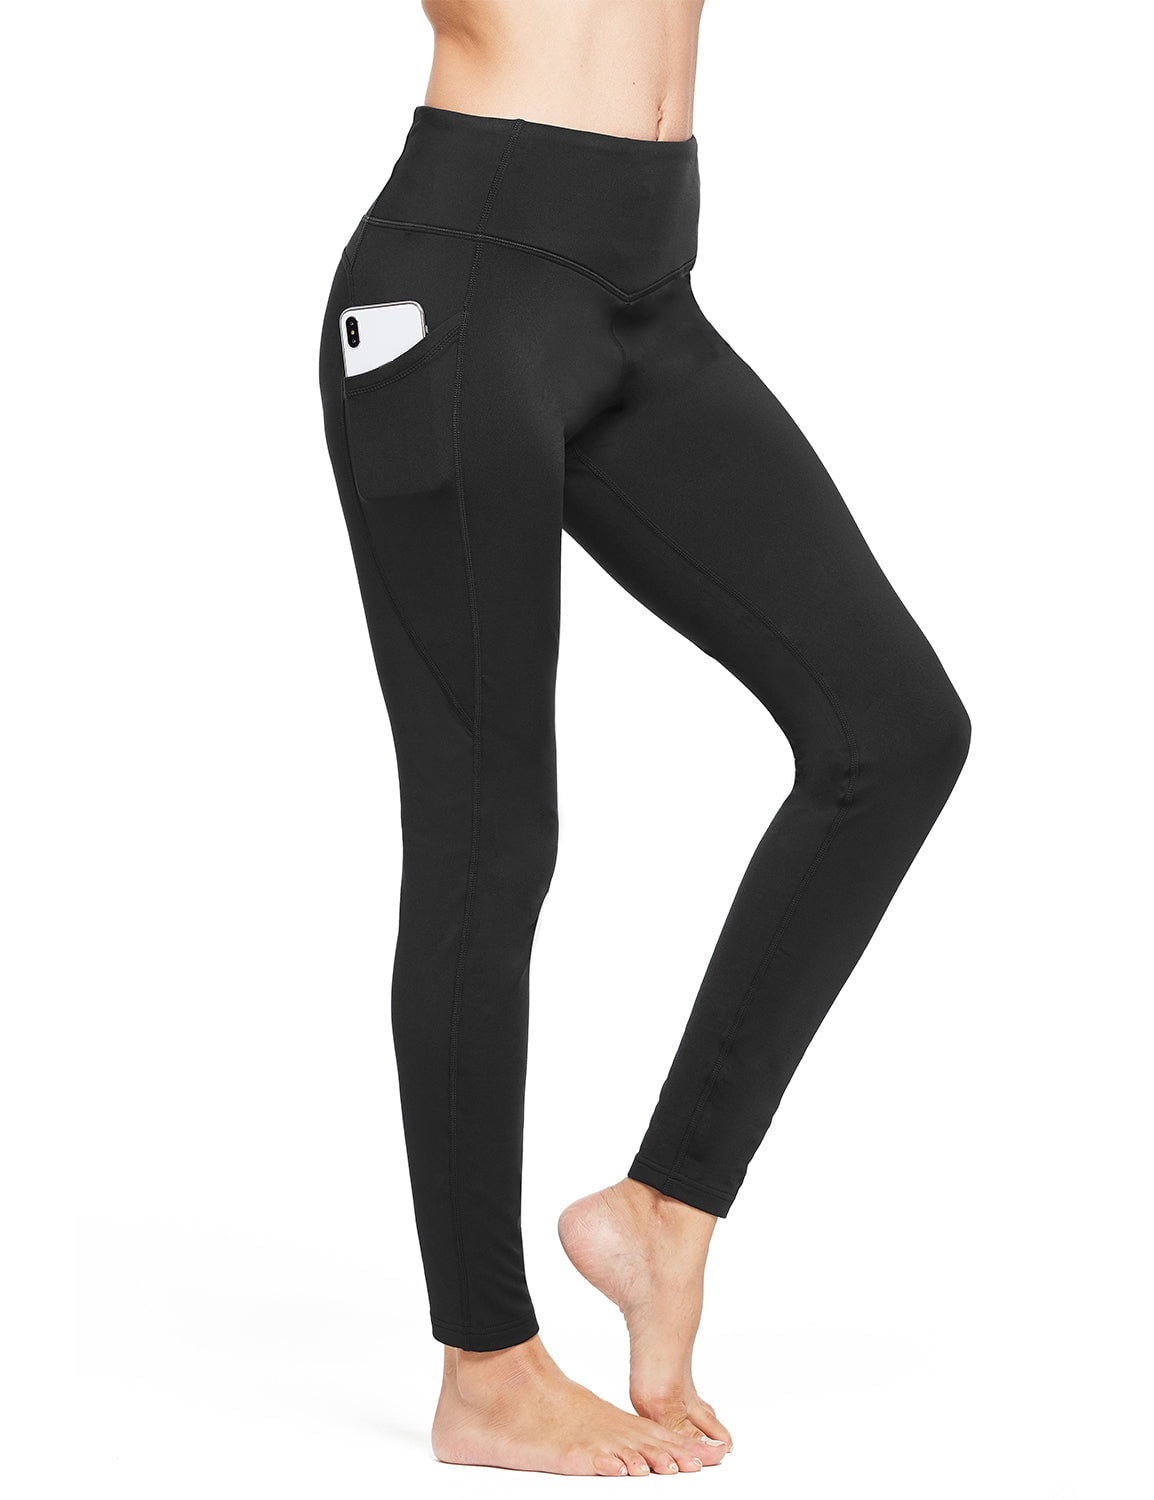 BALEAF Women's Fleece Lined Leggings Winter Yoga Leggings Thermal High Waisted Pocketed Pants Black S - image 1 of 8